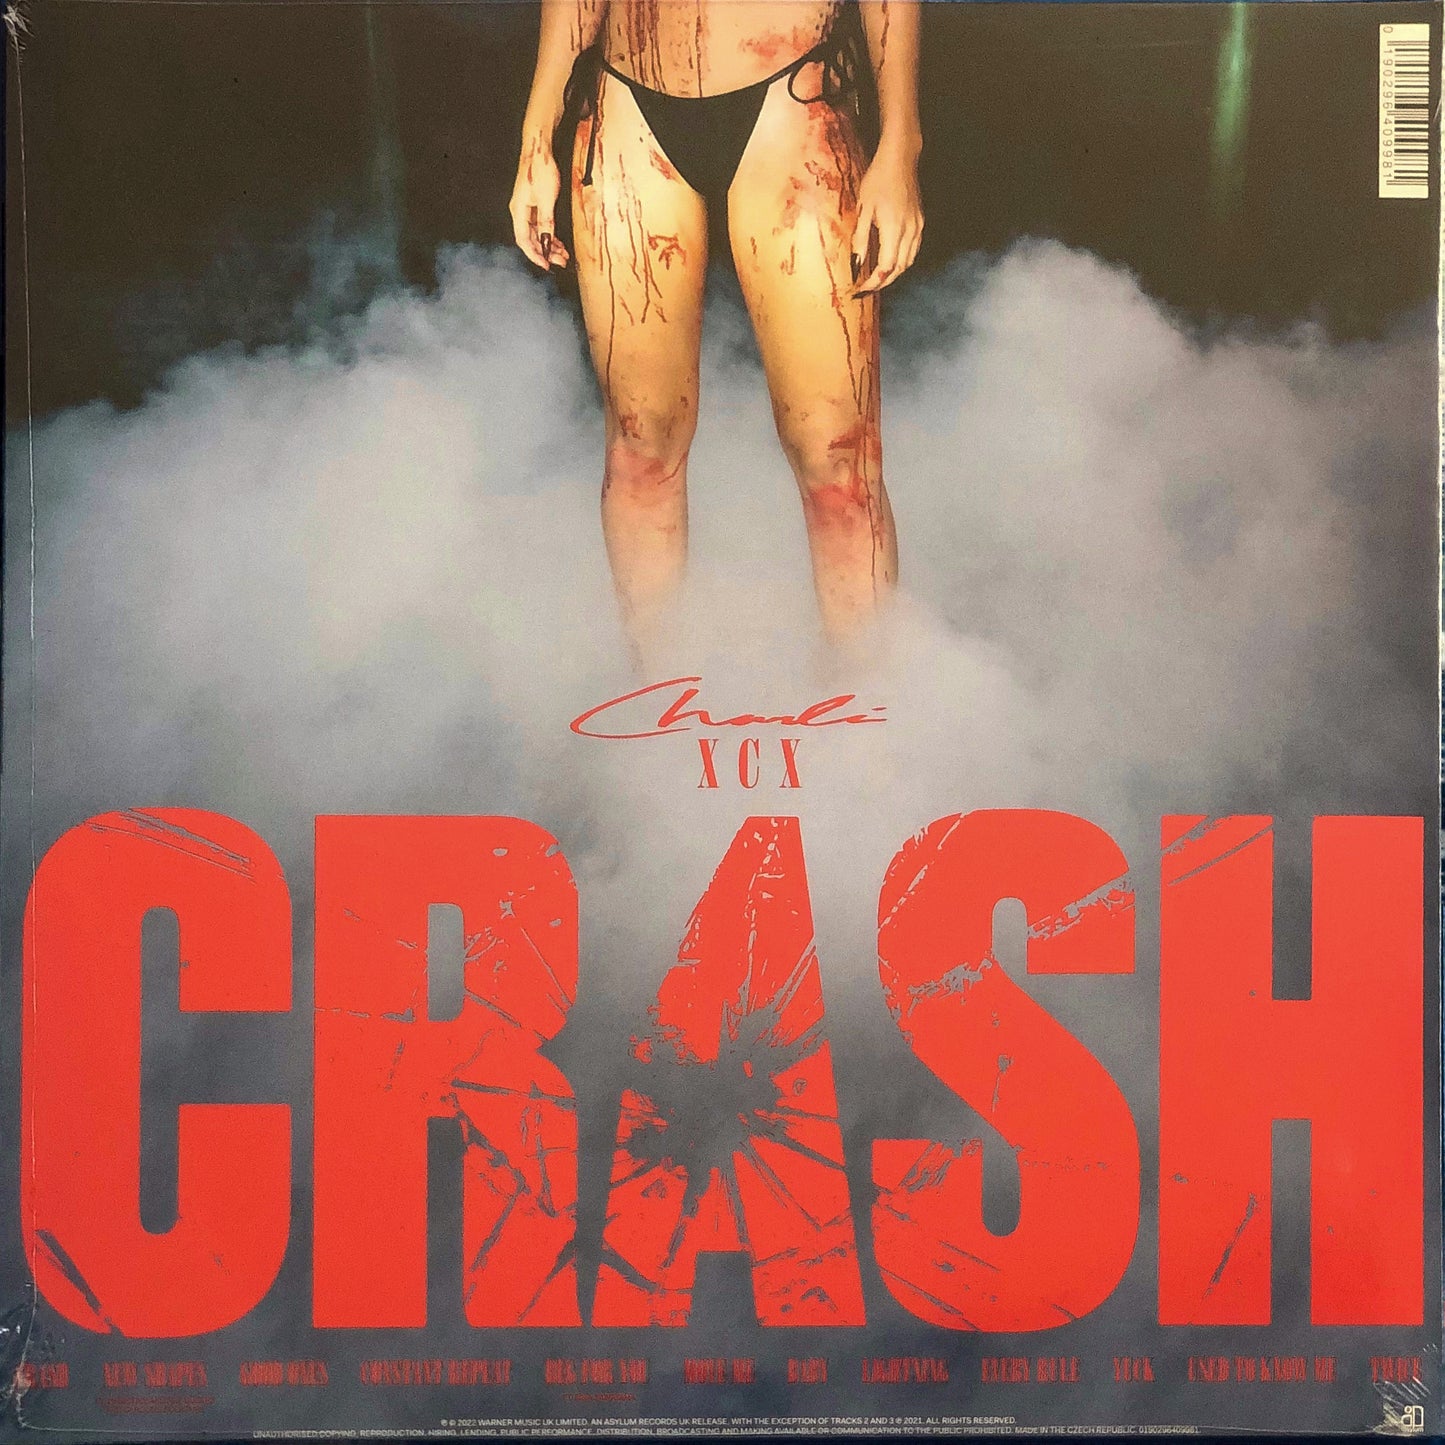 Crash (Limited Edition White Vinyl + Signed Insert)